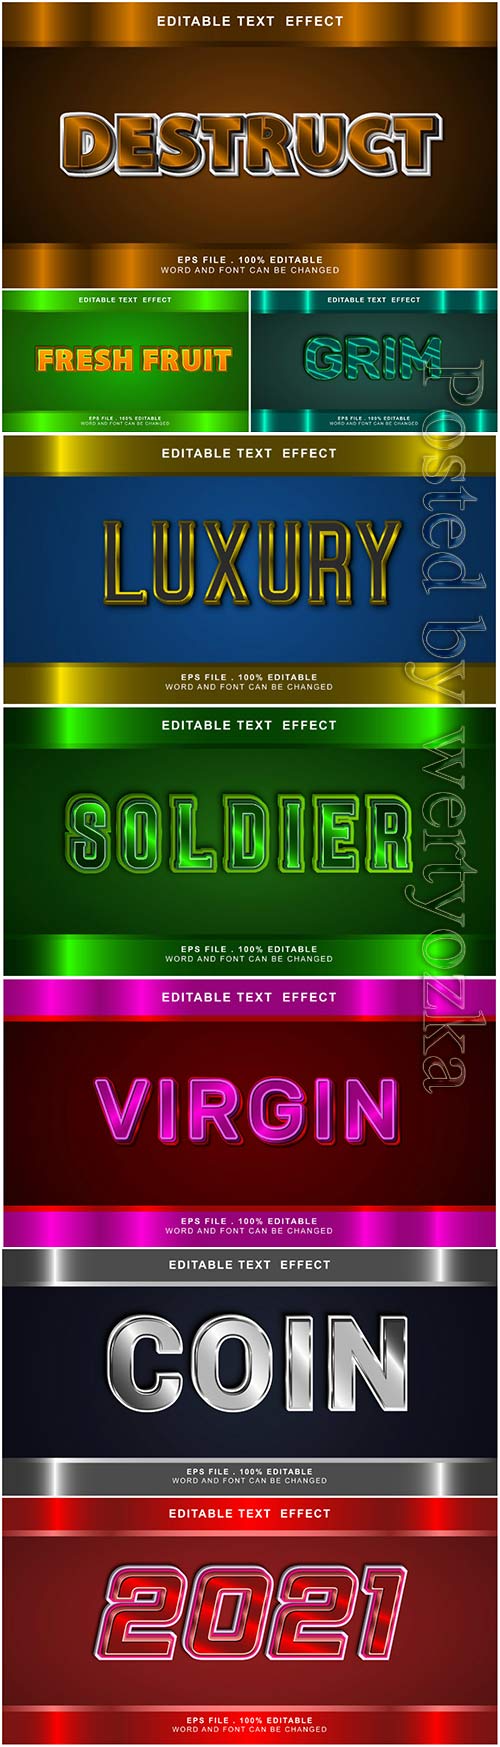 3d editable text style effect vector vol 2